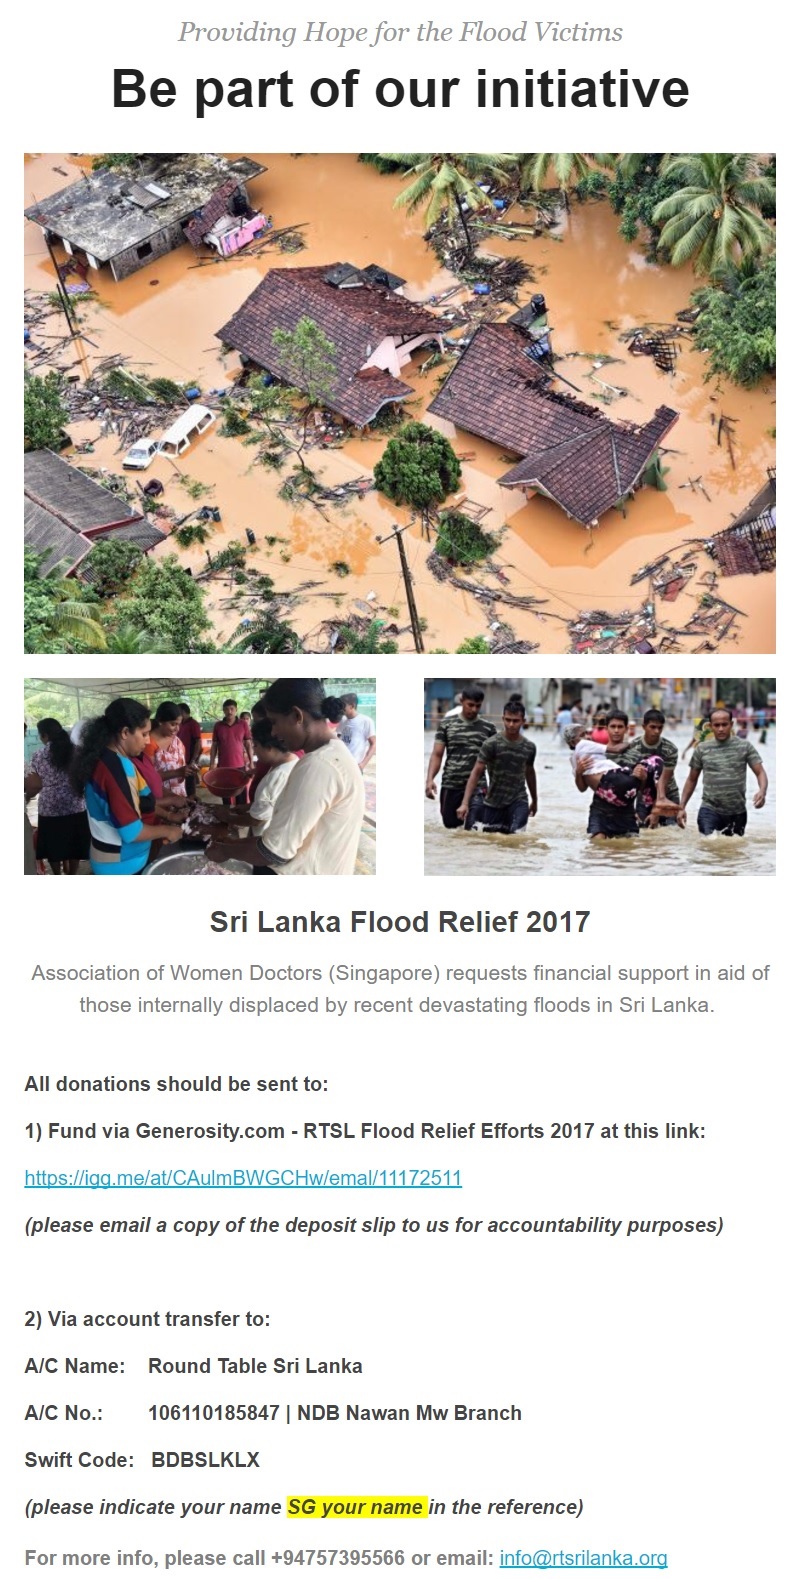 Sri Lanka Flood Relief 2017 – Providing Hope for the Flood Victims